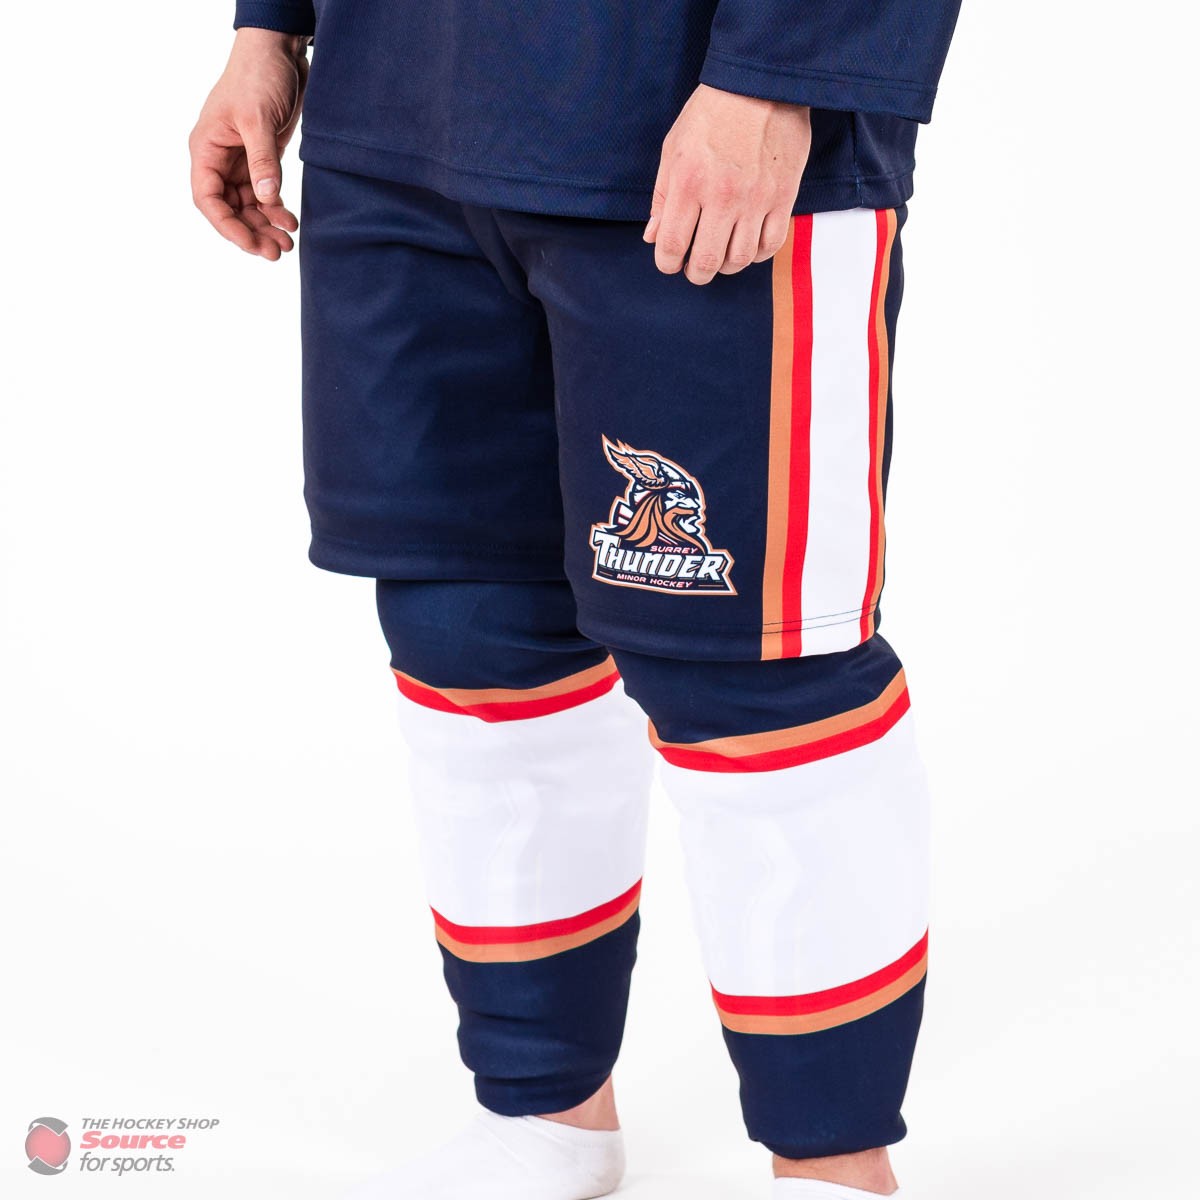 Surrey Minor -- Senior SP Knitted Hockey Pant Shell